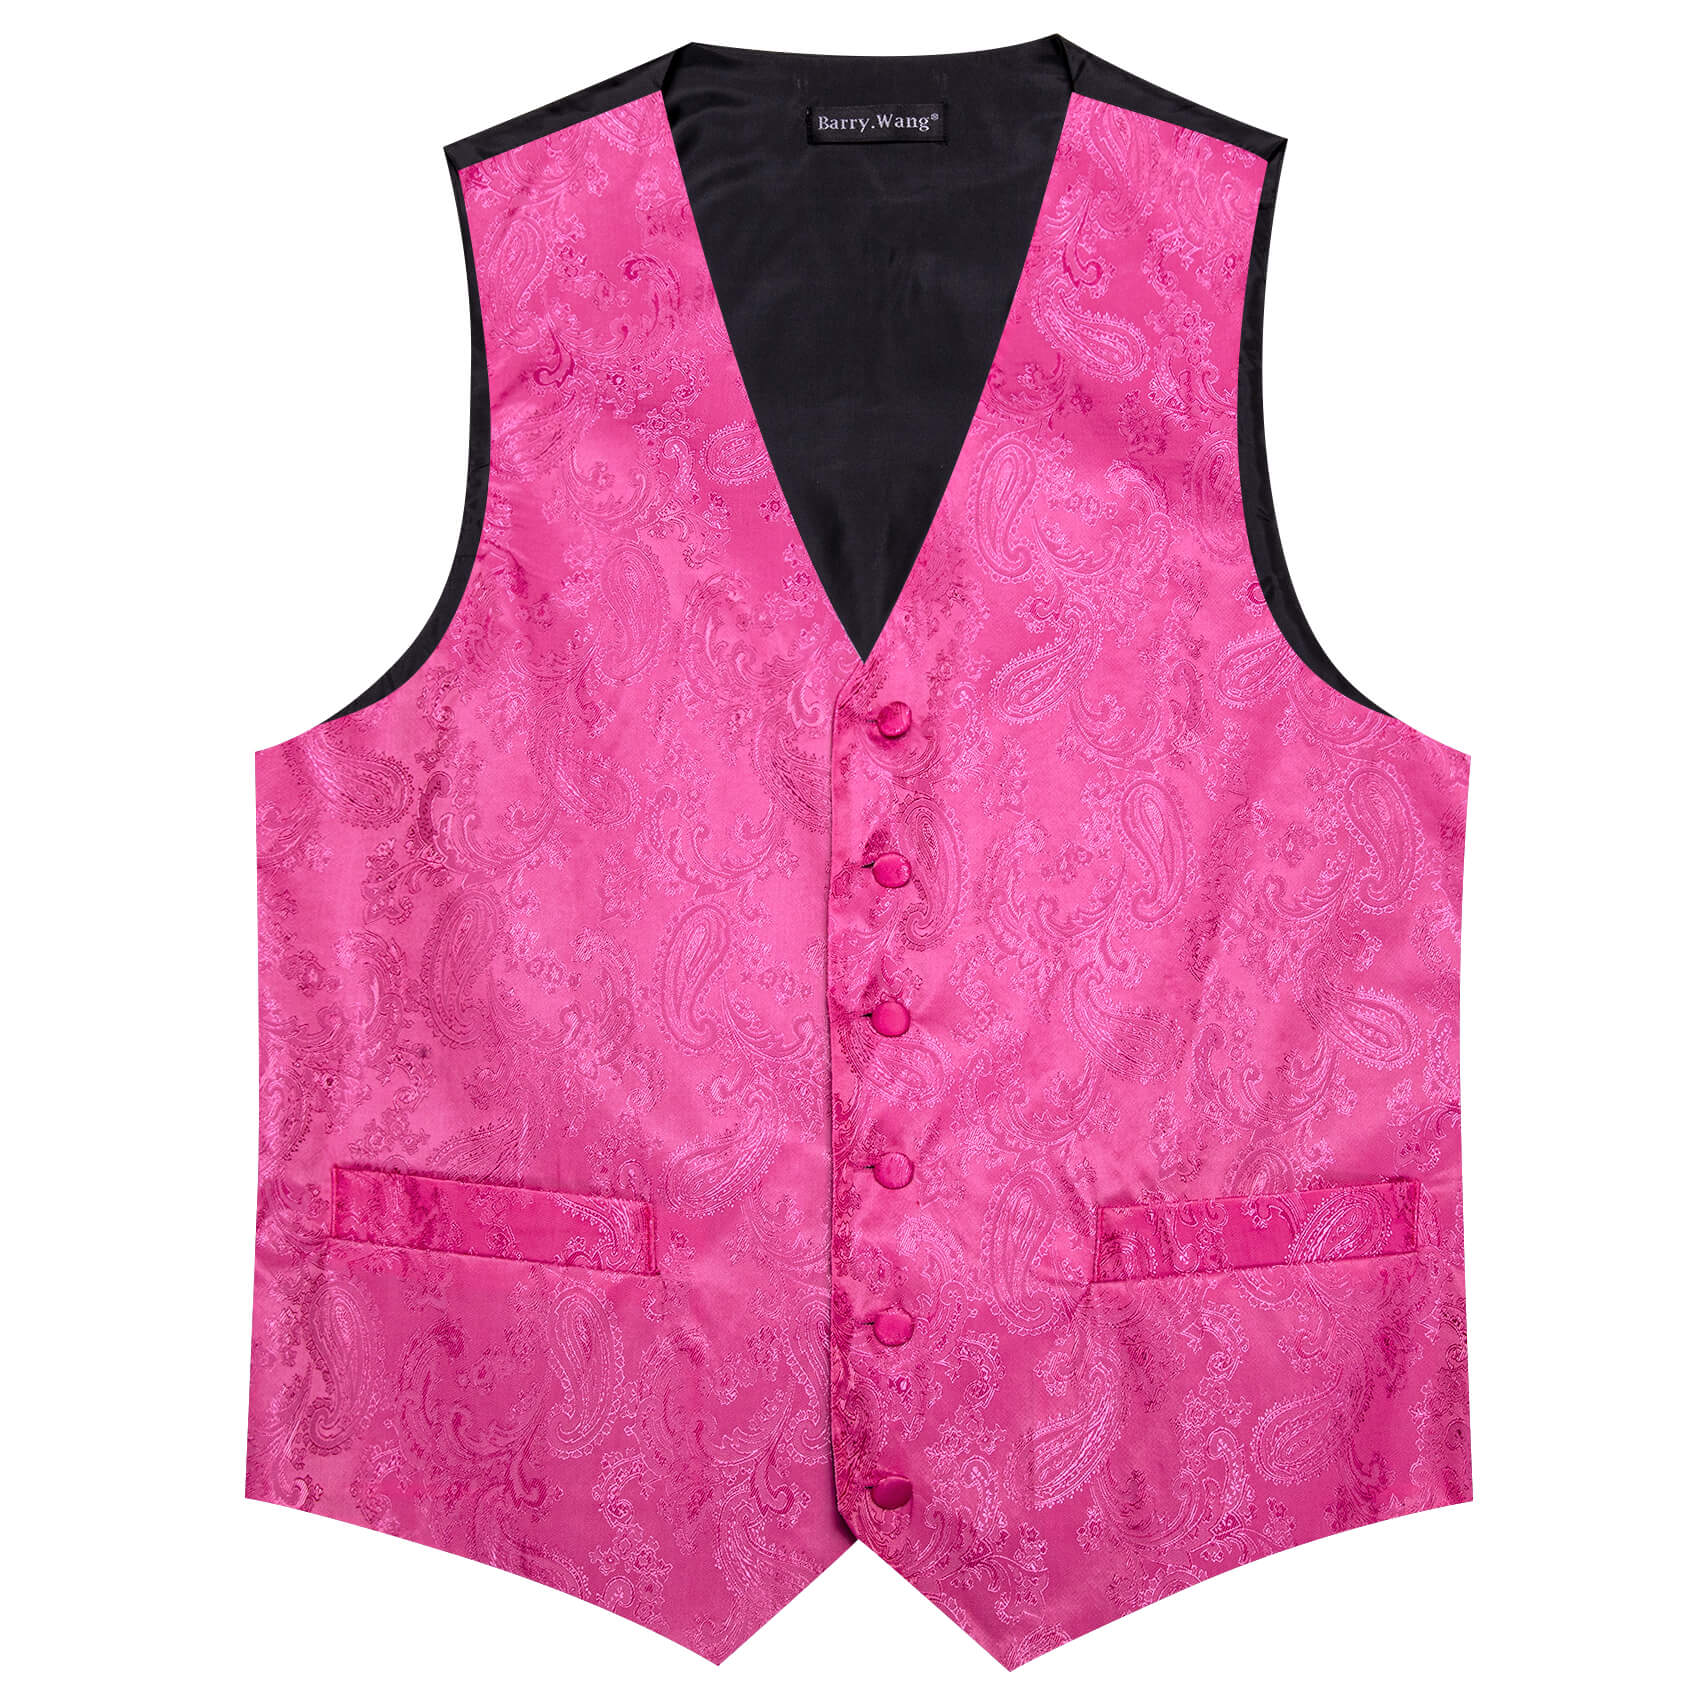 Barry Wang 5pcs Mens Waistcoat Set Hot Pink Paisley Vest